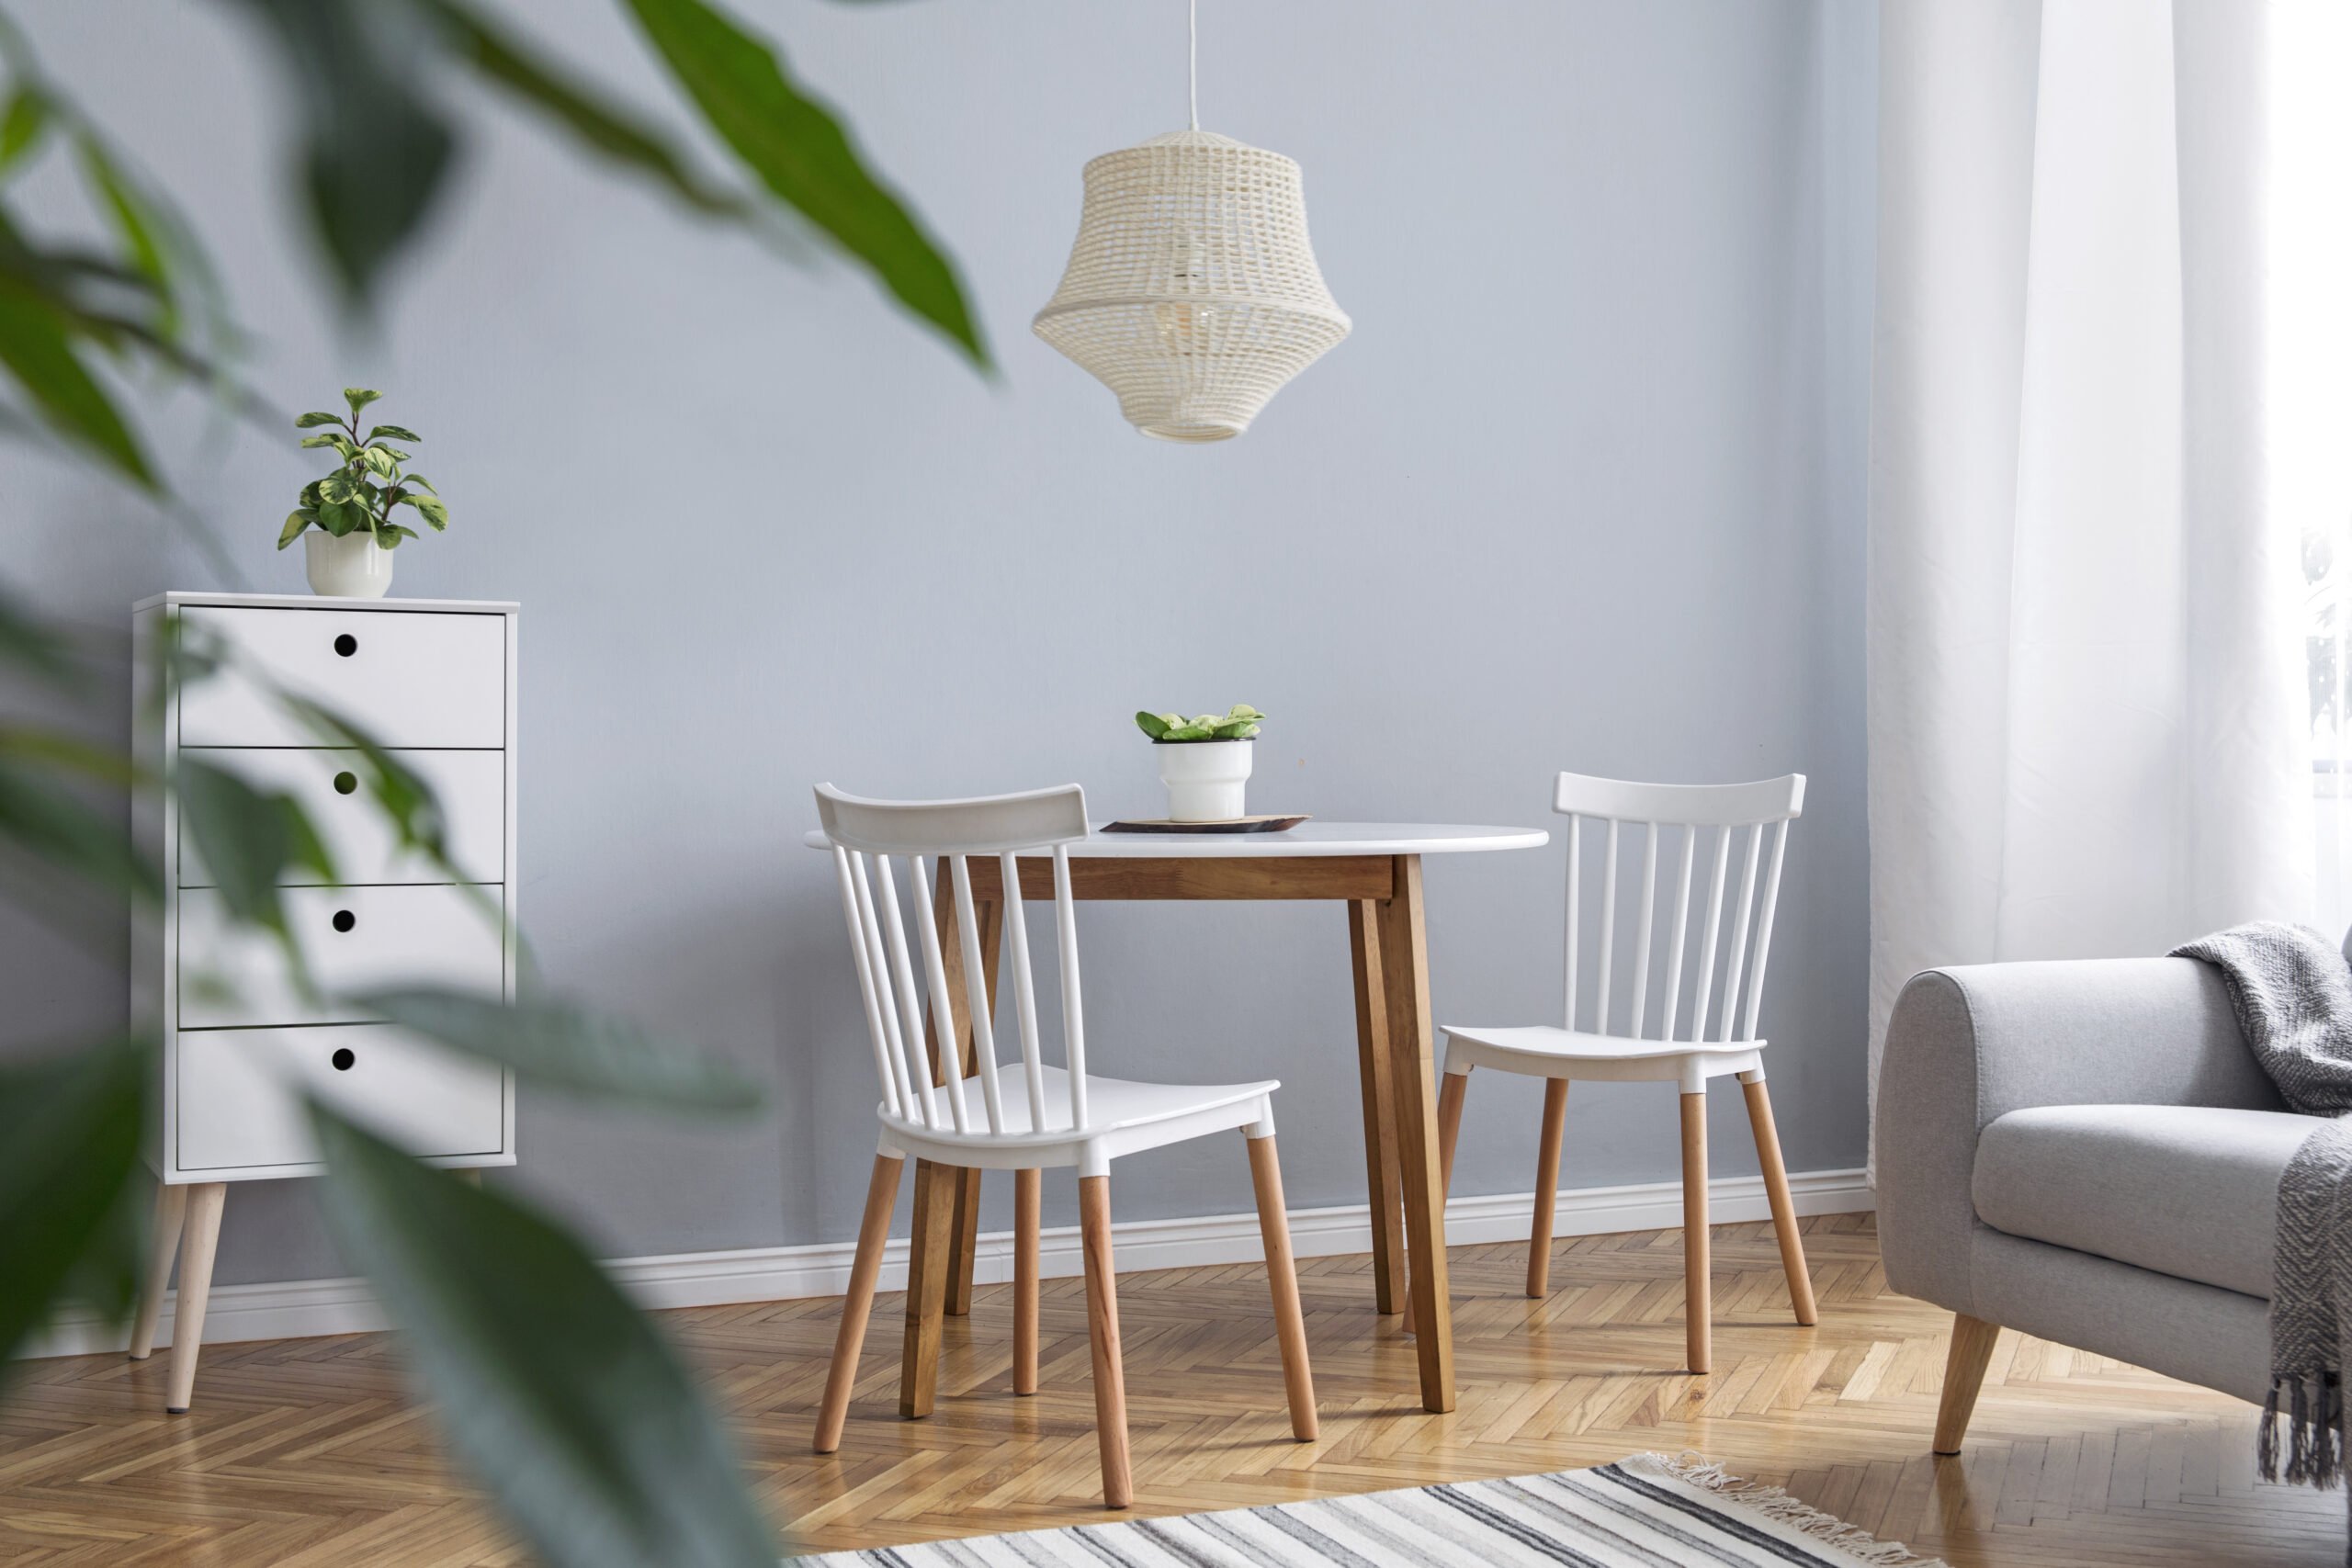 stylish scandinavian living room with creative woo 2022 02 23 19 09 41 utc scaled